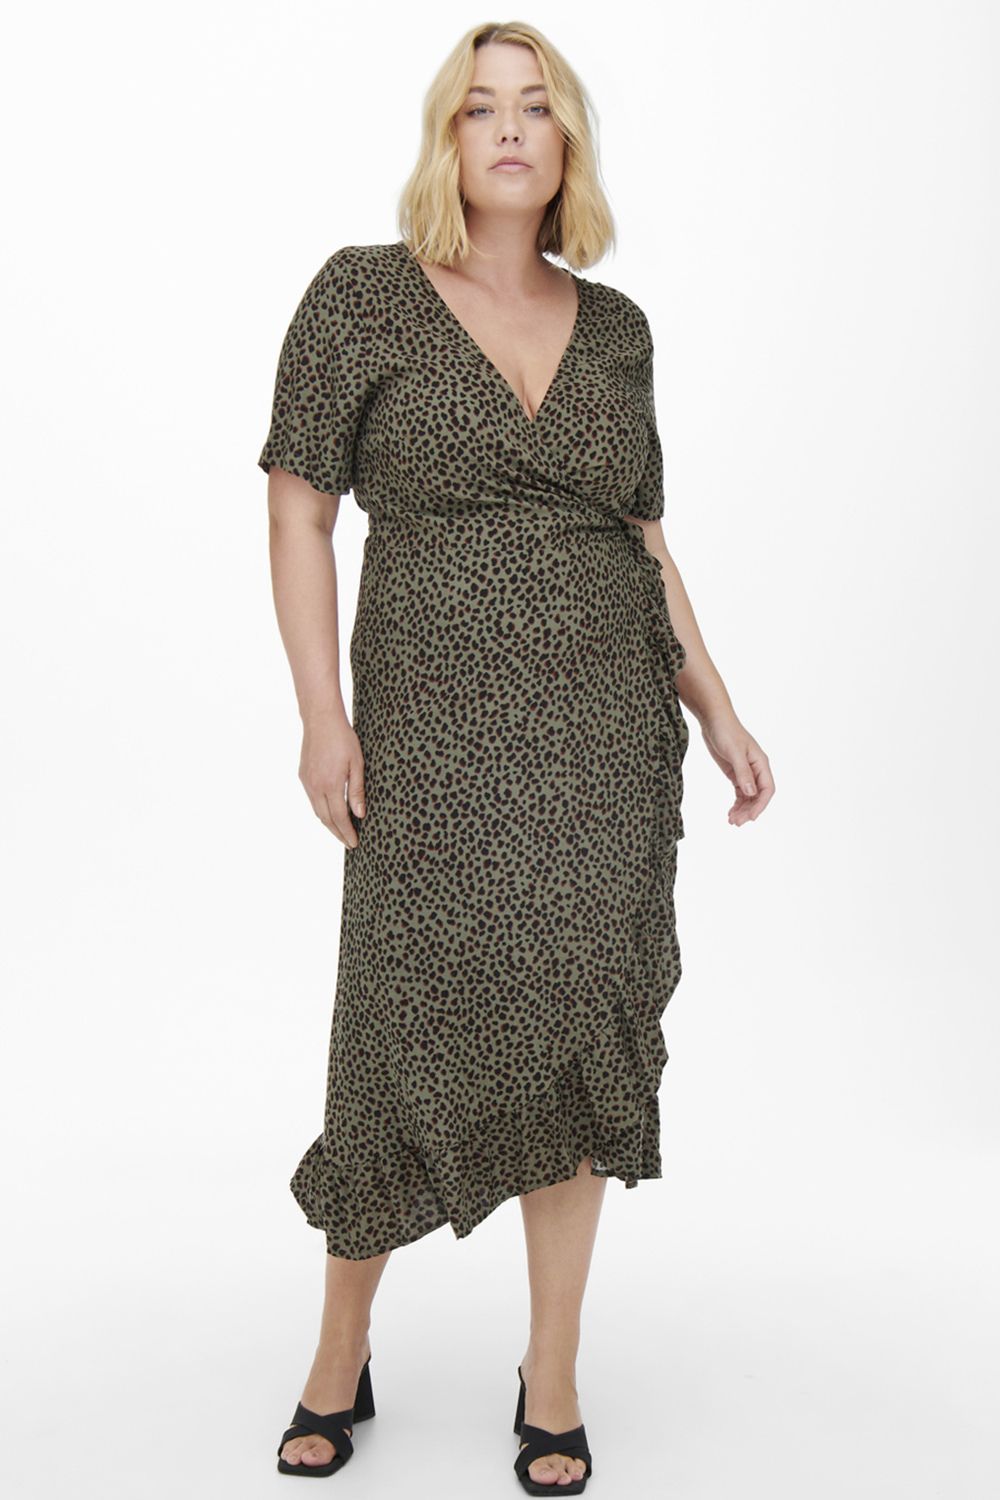 Voorzieningen Aubergine Pompeii Grote maten damesmode | MATELOOS | grote maten Designers :: Clothing ::  ONLY jurk overslag ruche CARFRIDA